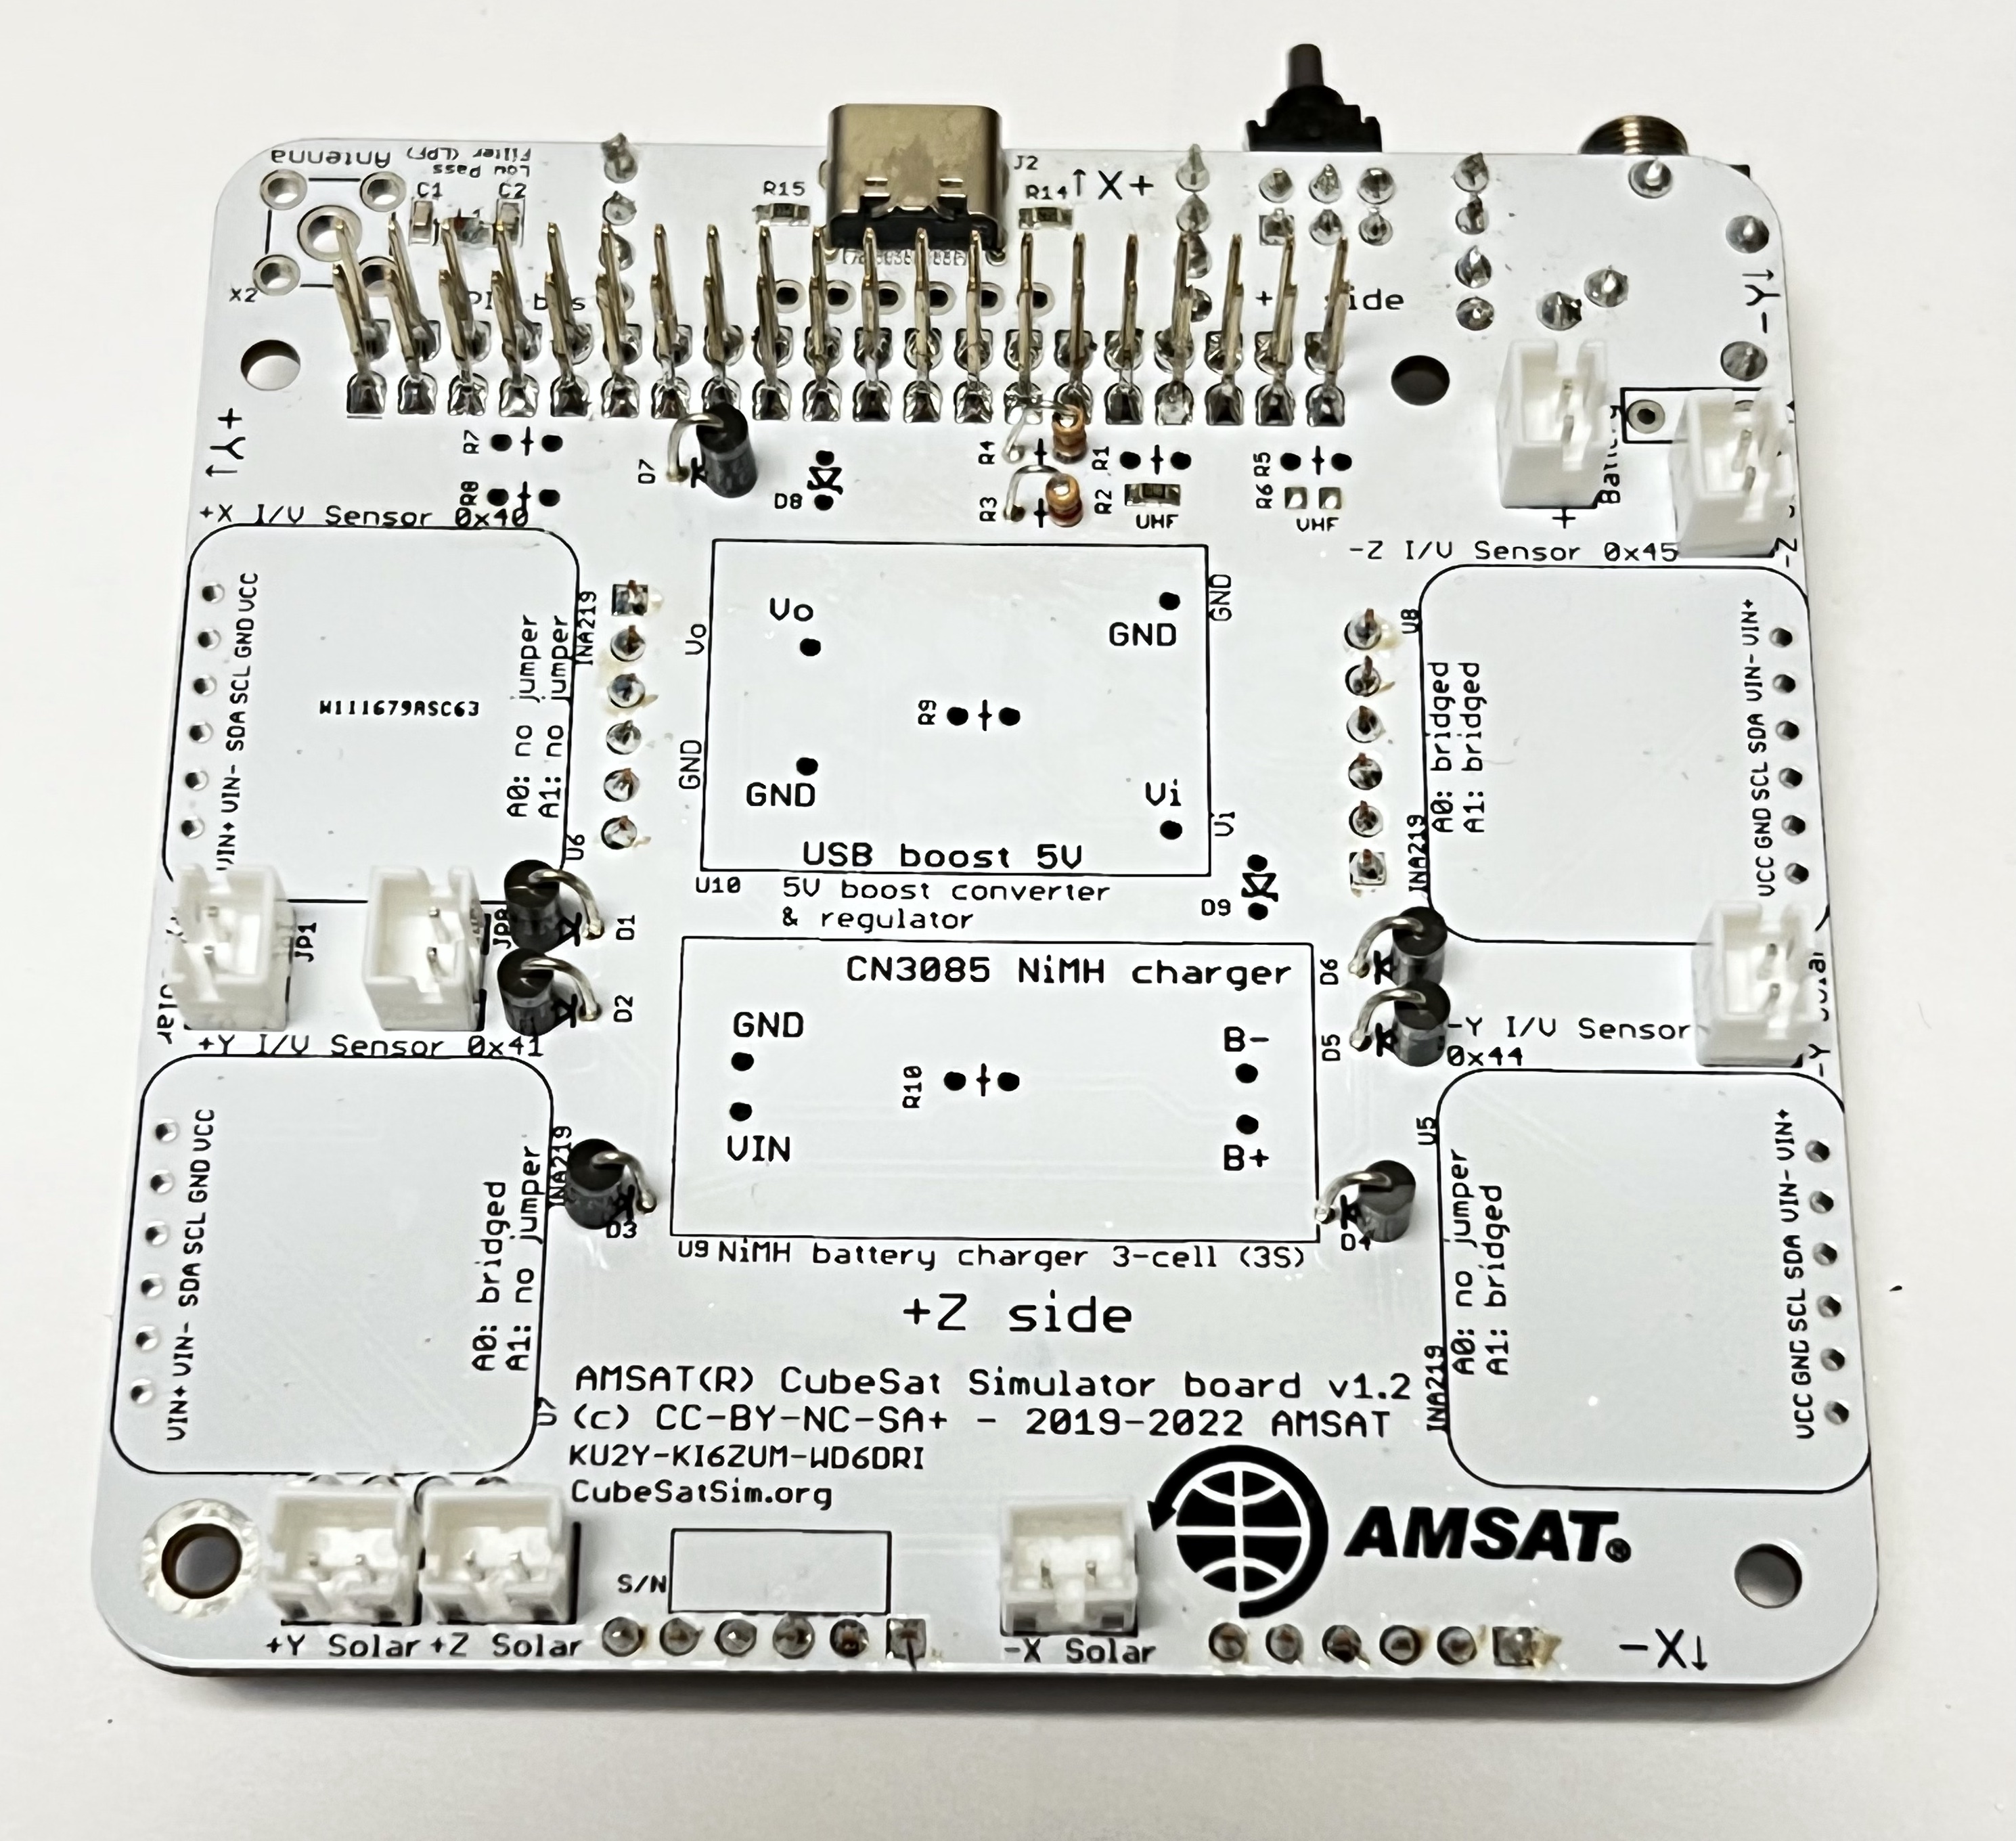 PCB with JST Connectors